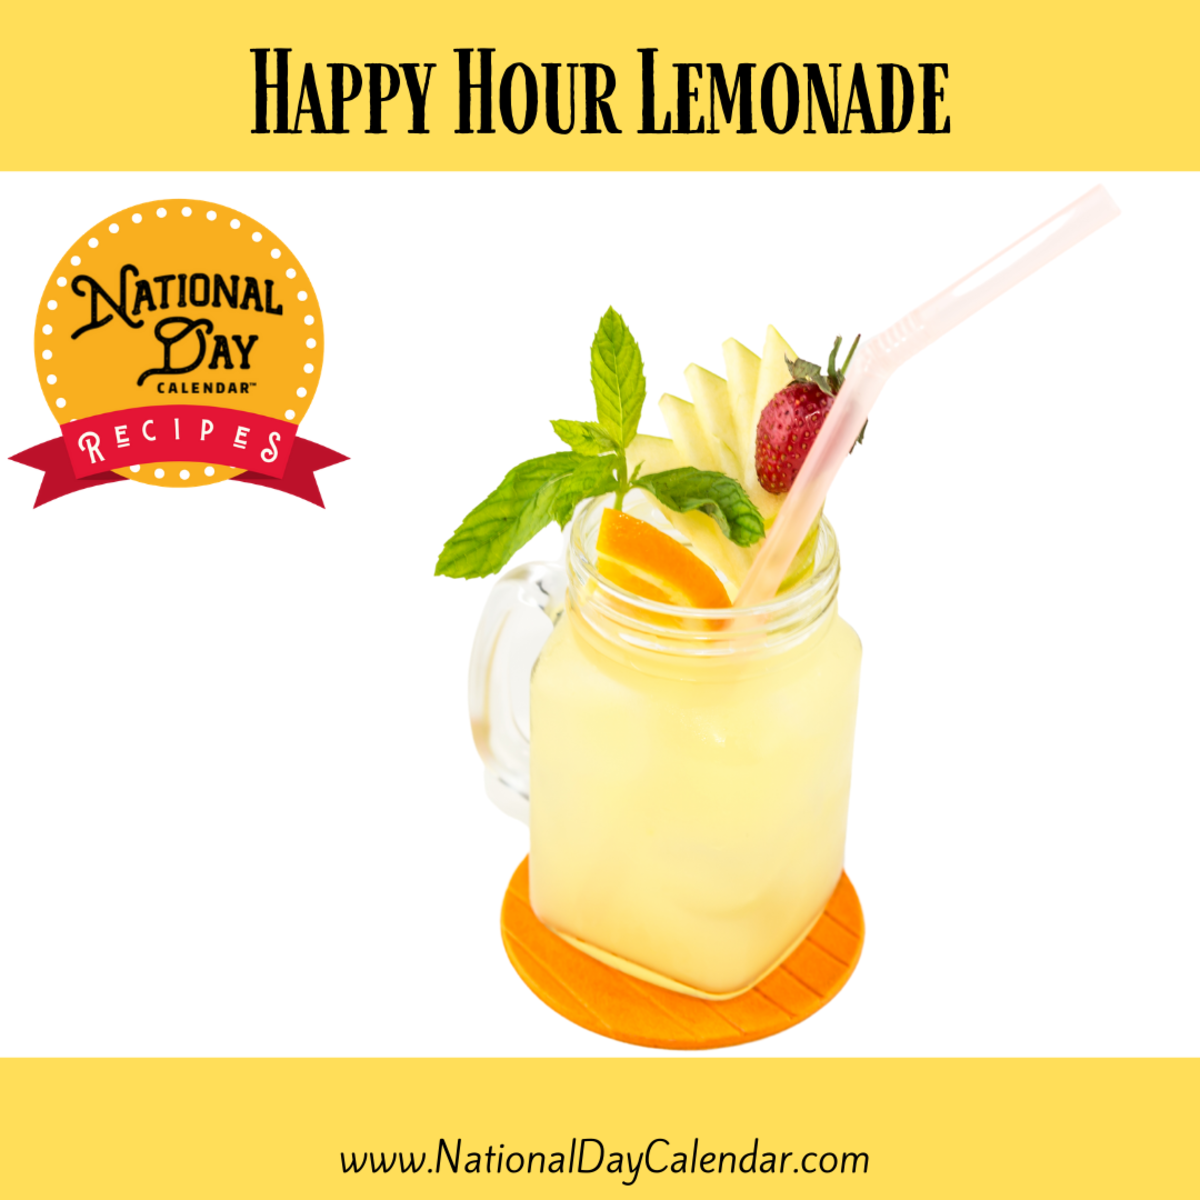 Happy Hour Lemonade recipe